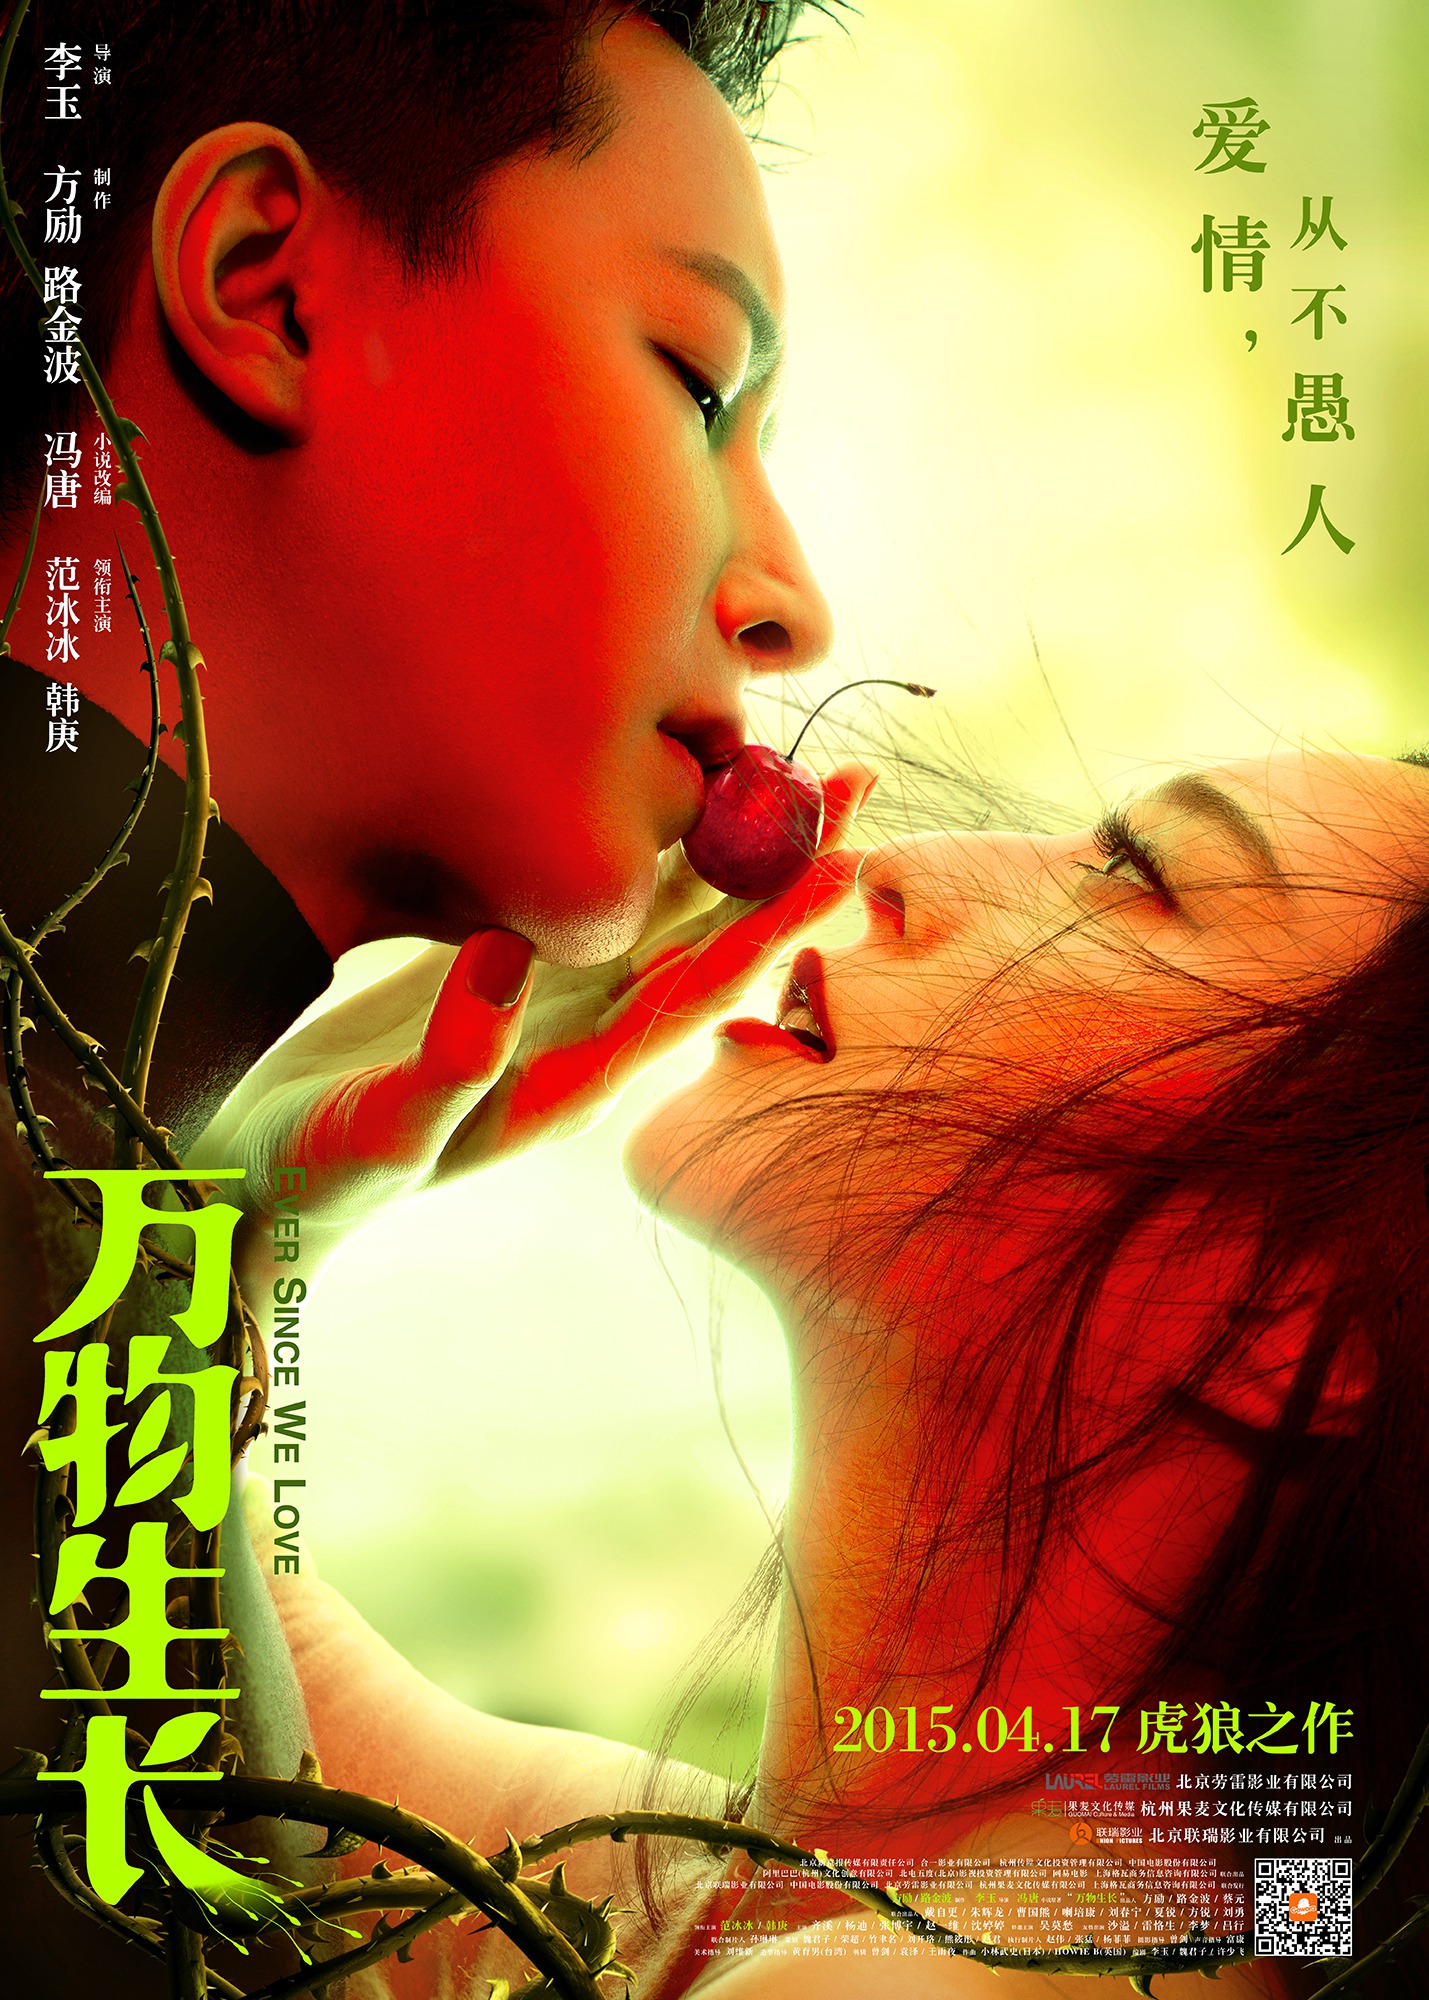 Mega Sized Movie Poster Image for Wan Wu Sheng Zhang (#3 of 4)